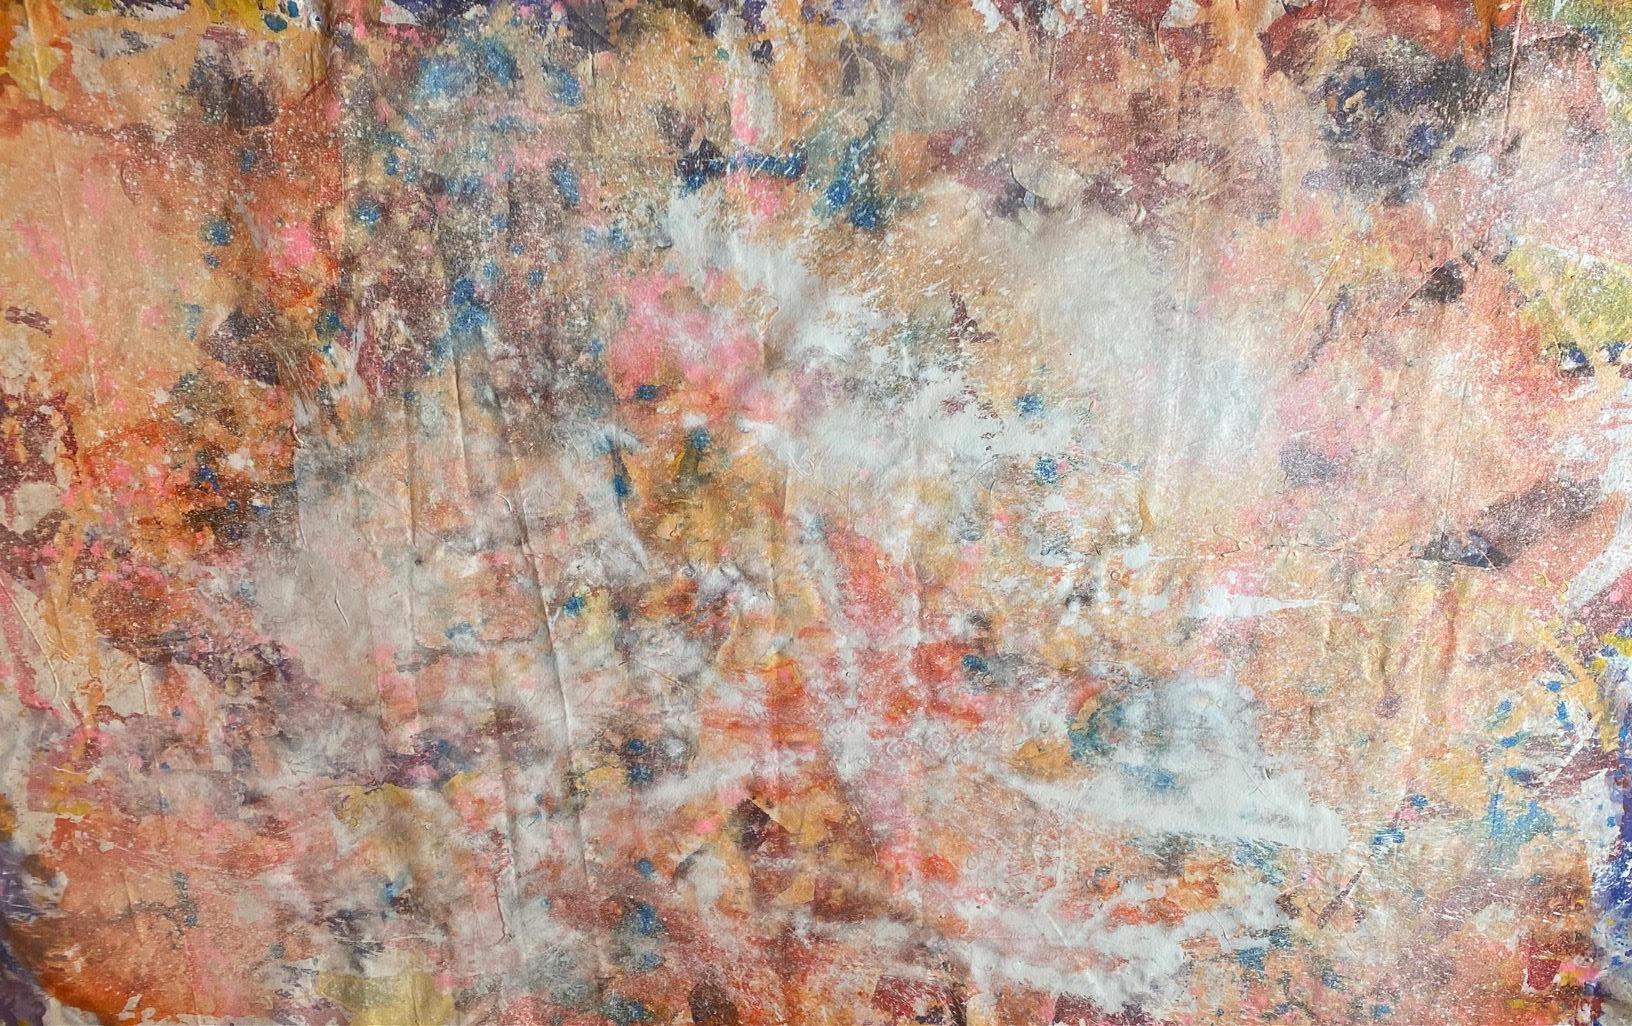 Nan Van Ryzin Abstract Painting - 'UNTITLED' Very Large Contemporary Abstract Mixed Media 116" x 78" by Nan